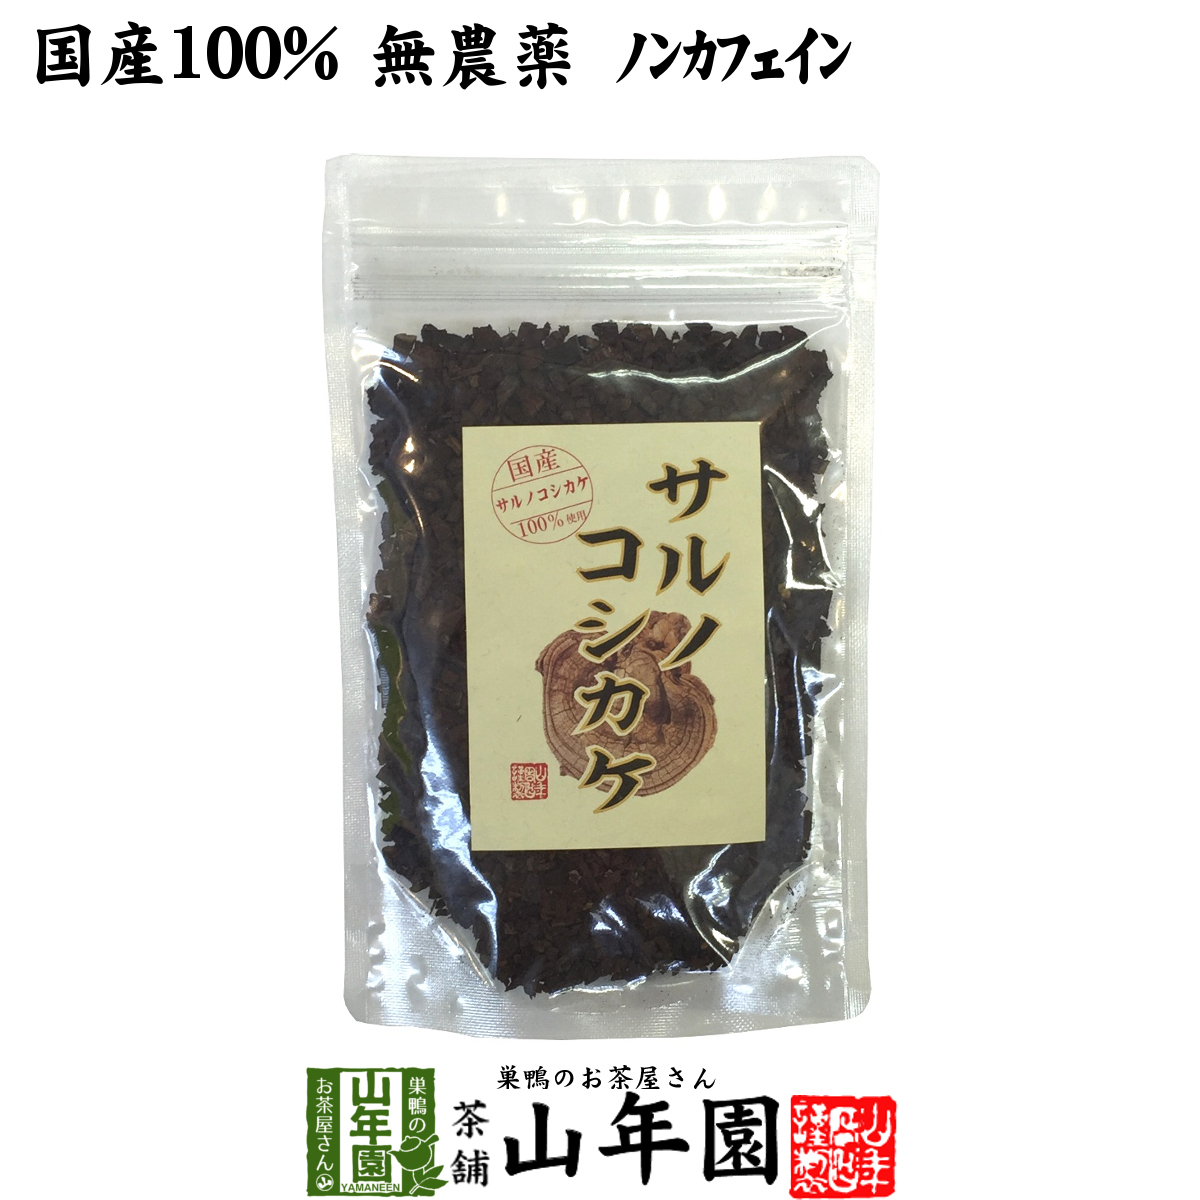  health tea domestic production 100% monkey noko deer ke tea 70g Miyazaki prefecture production non Cafe in less pesticide free shipping 